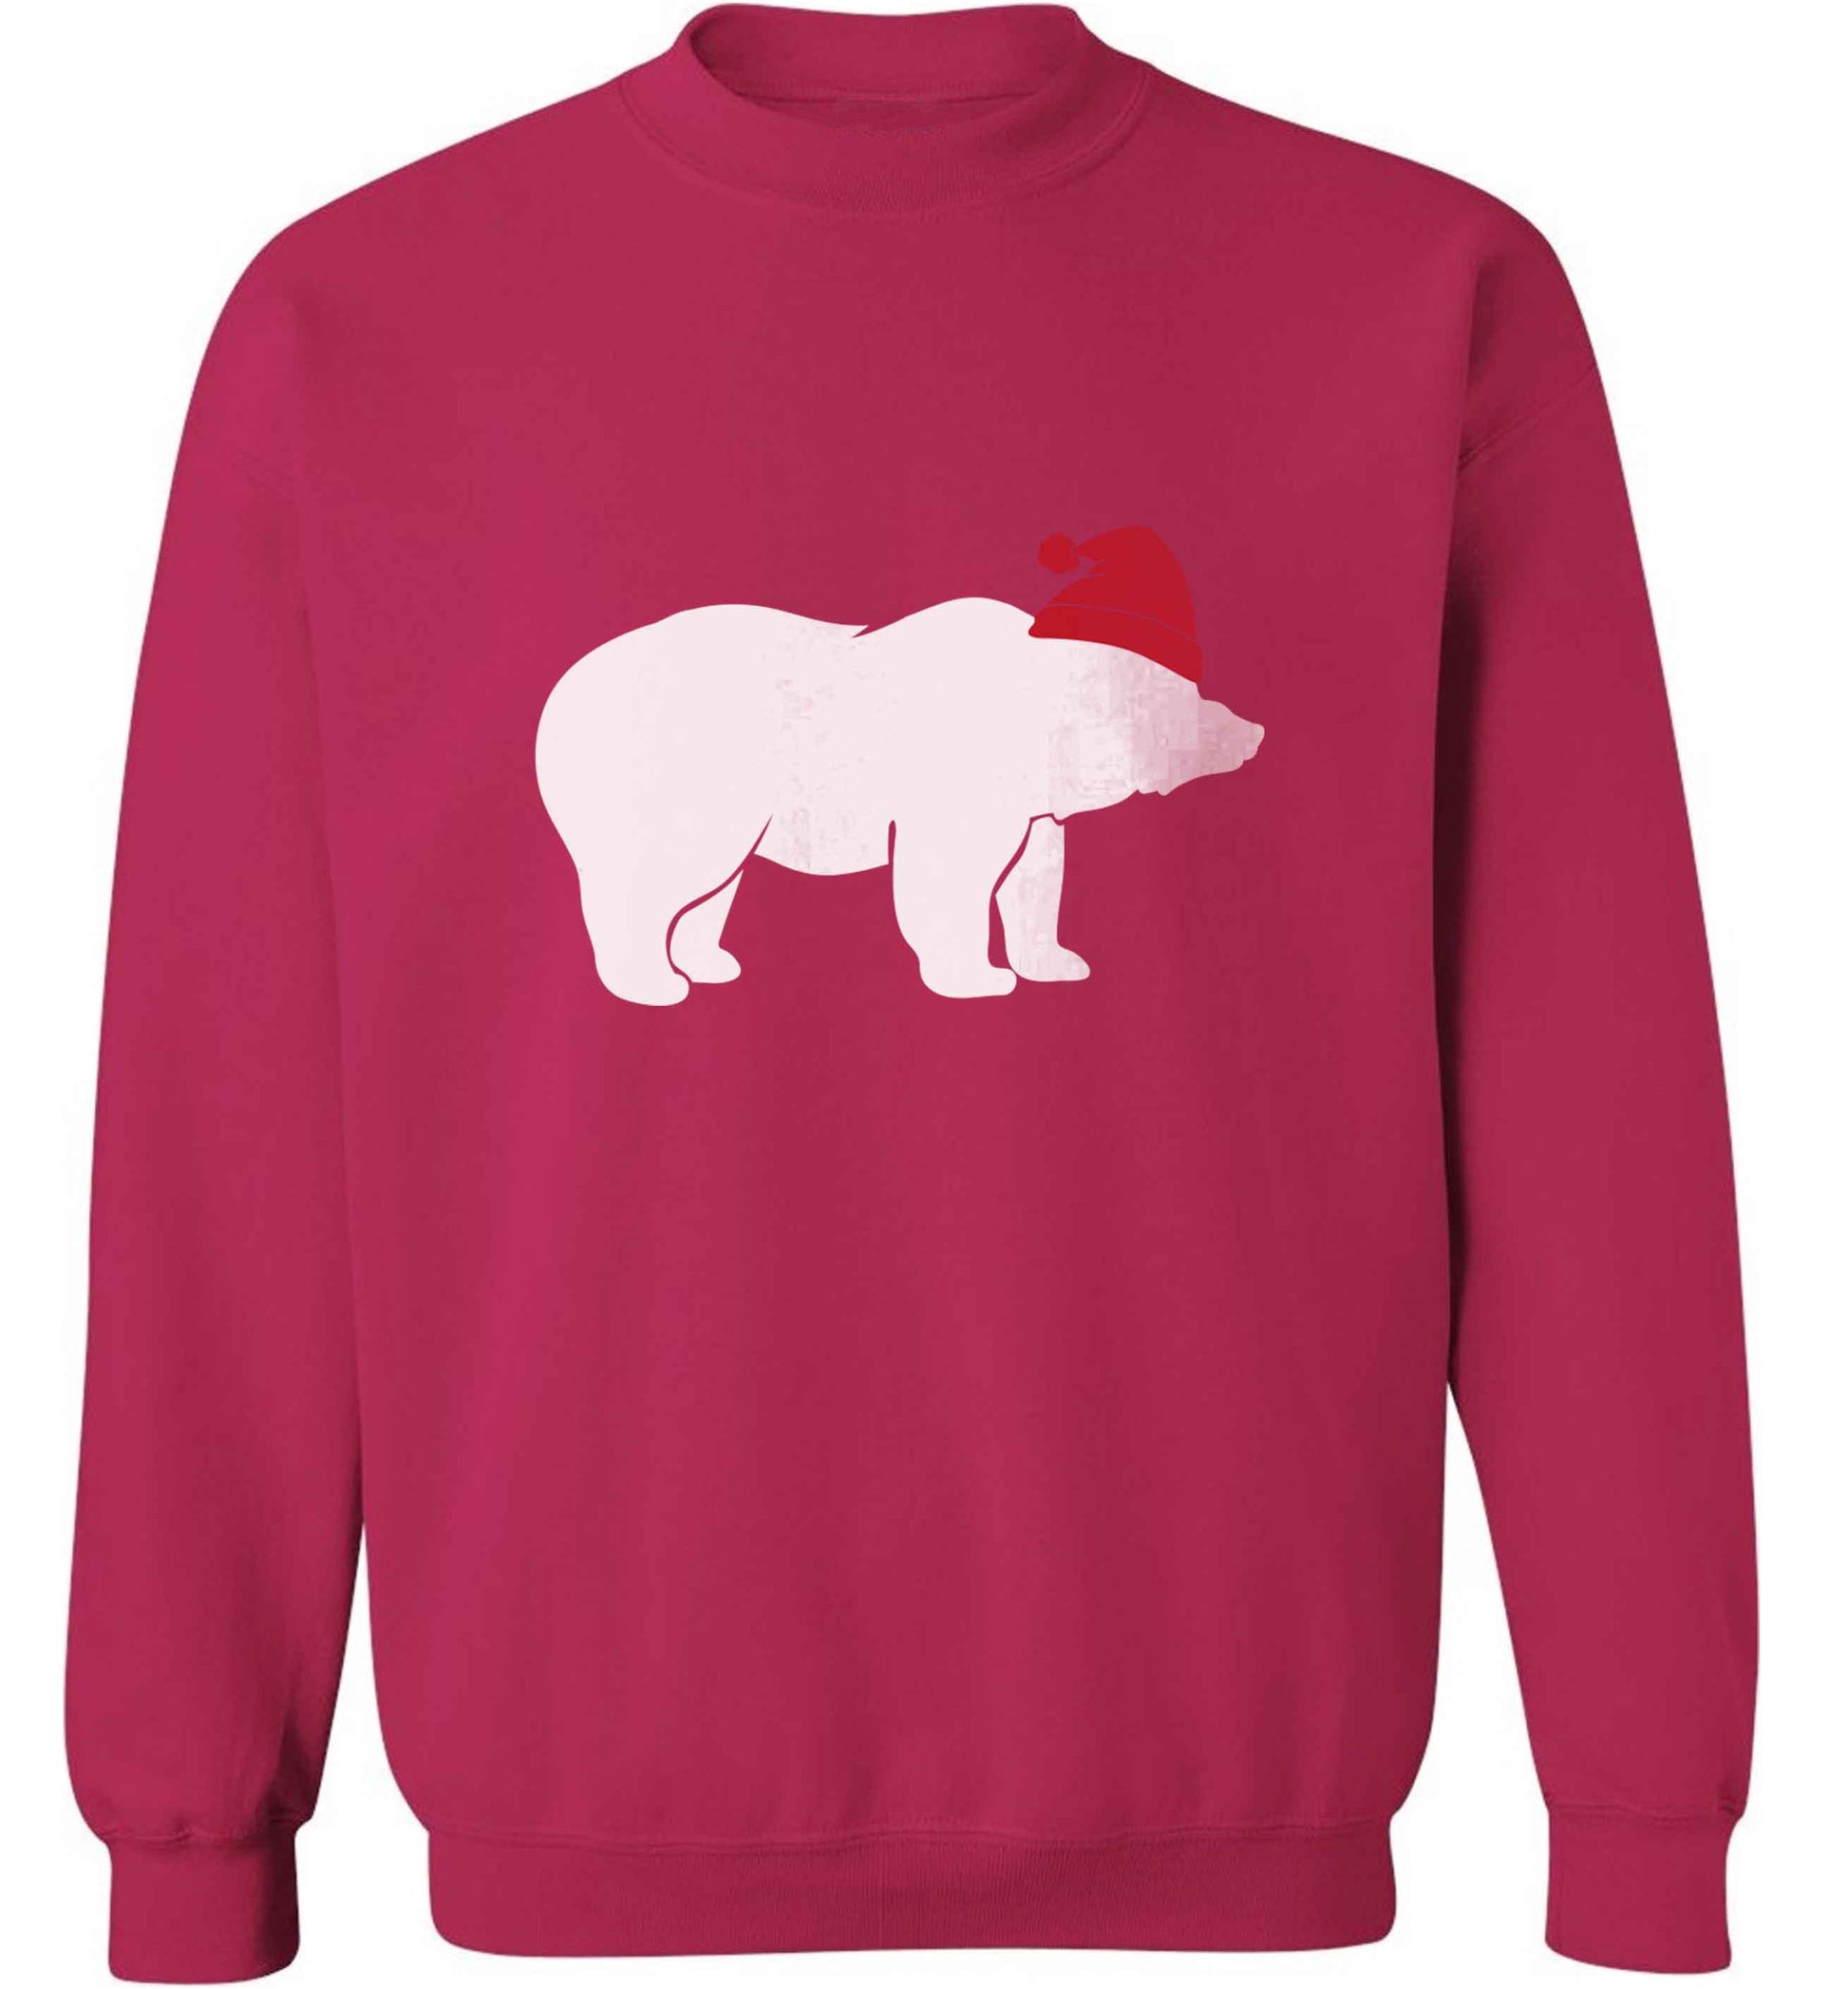 Blue bear Santa adult's unisex pink sweater 2XL